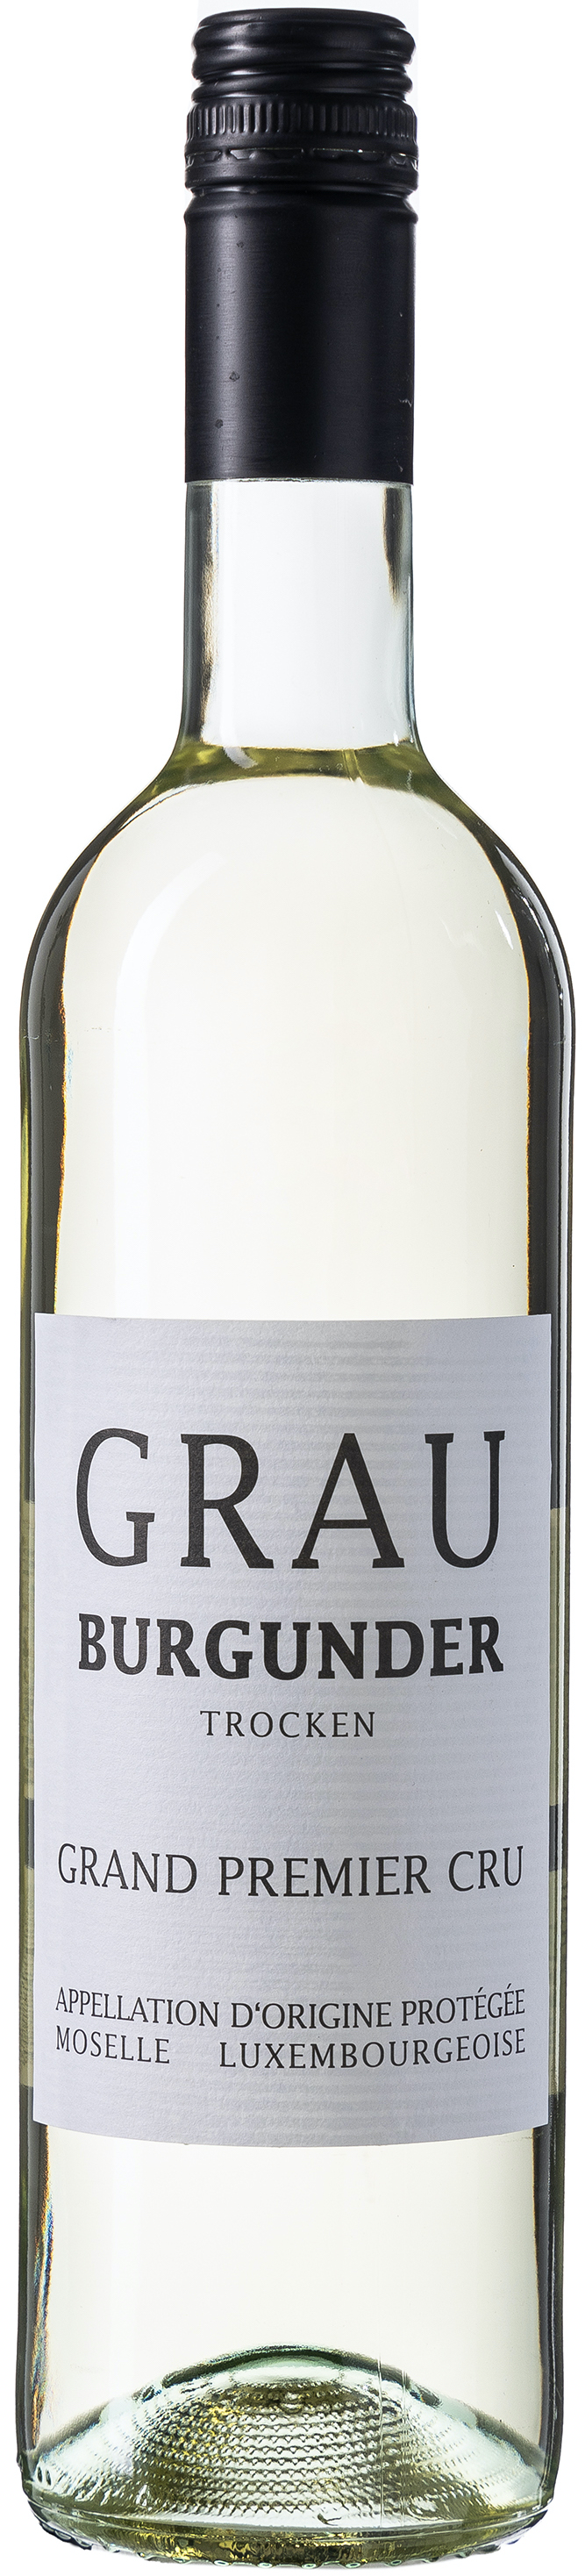 Grauburgunder trocken Grand Premier Cru 13% vol. 0,75L